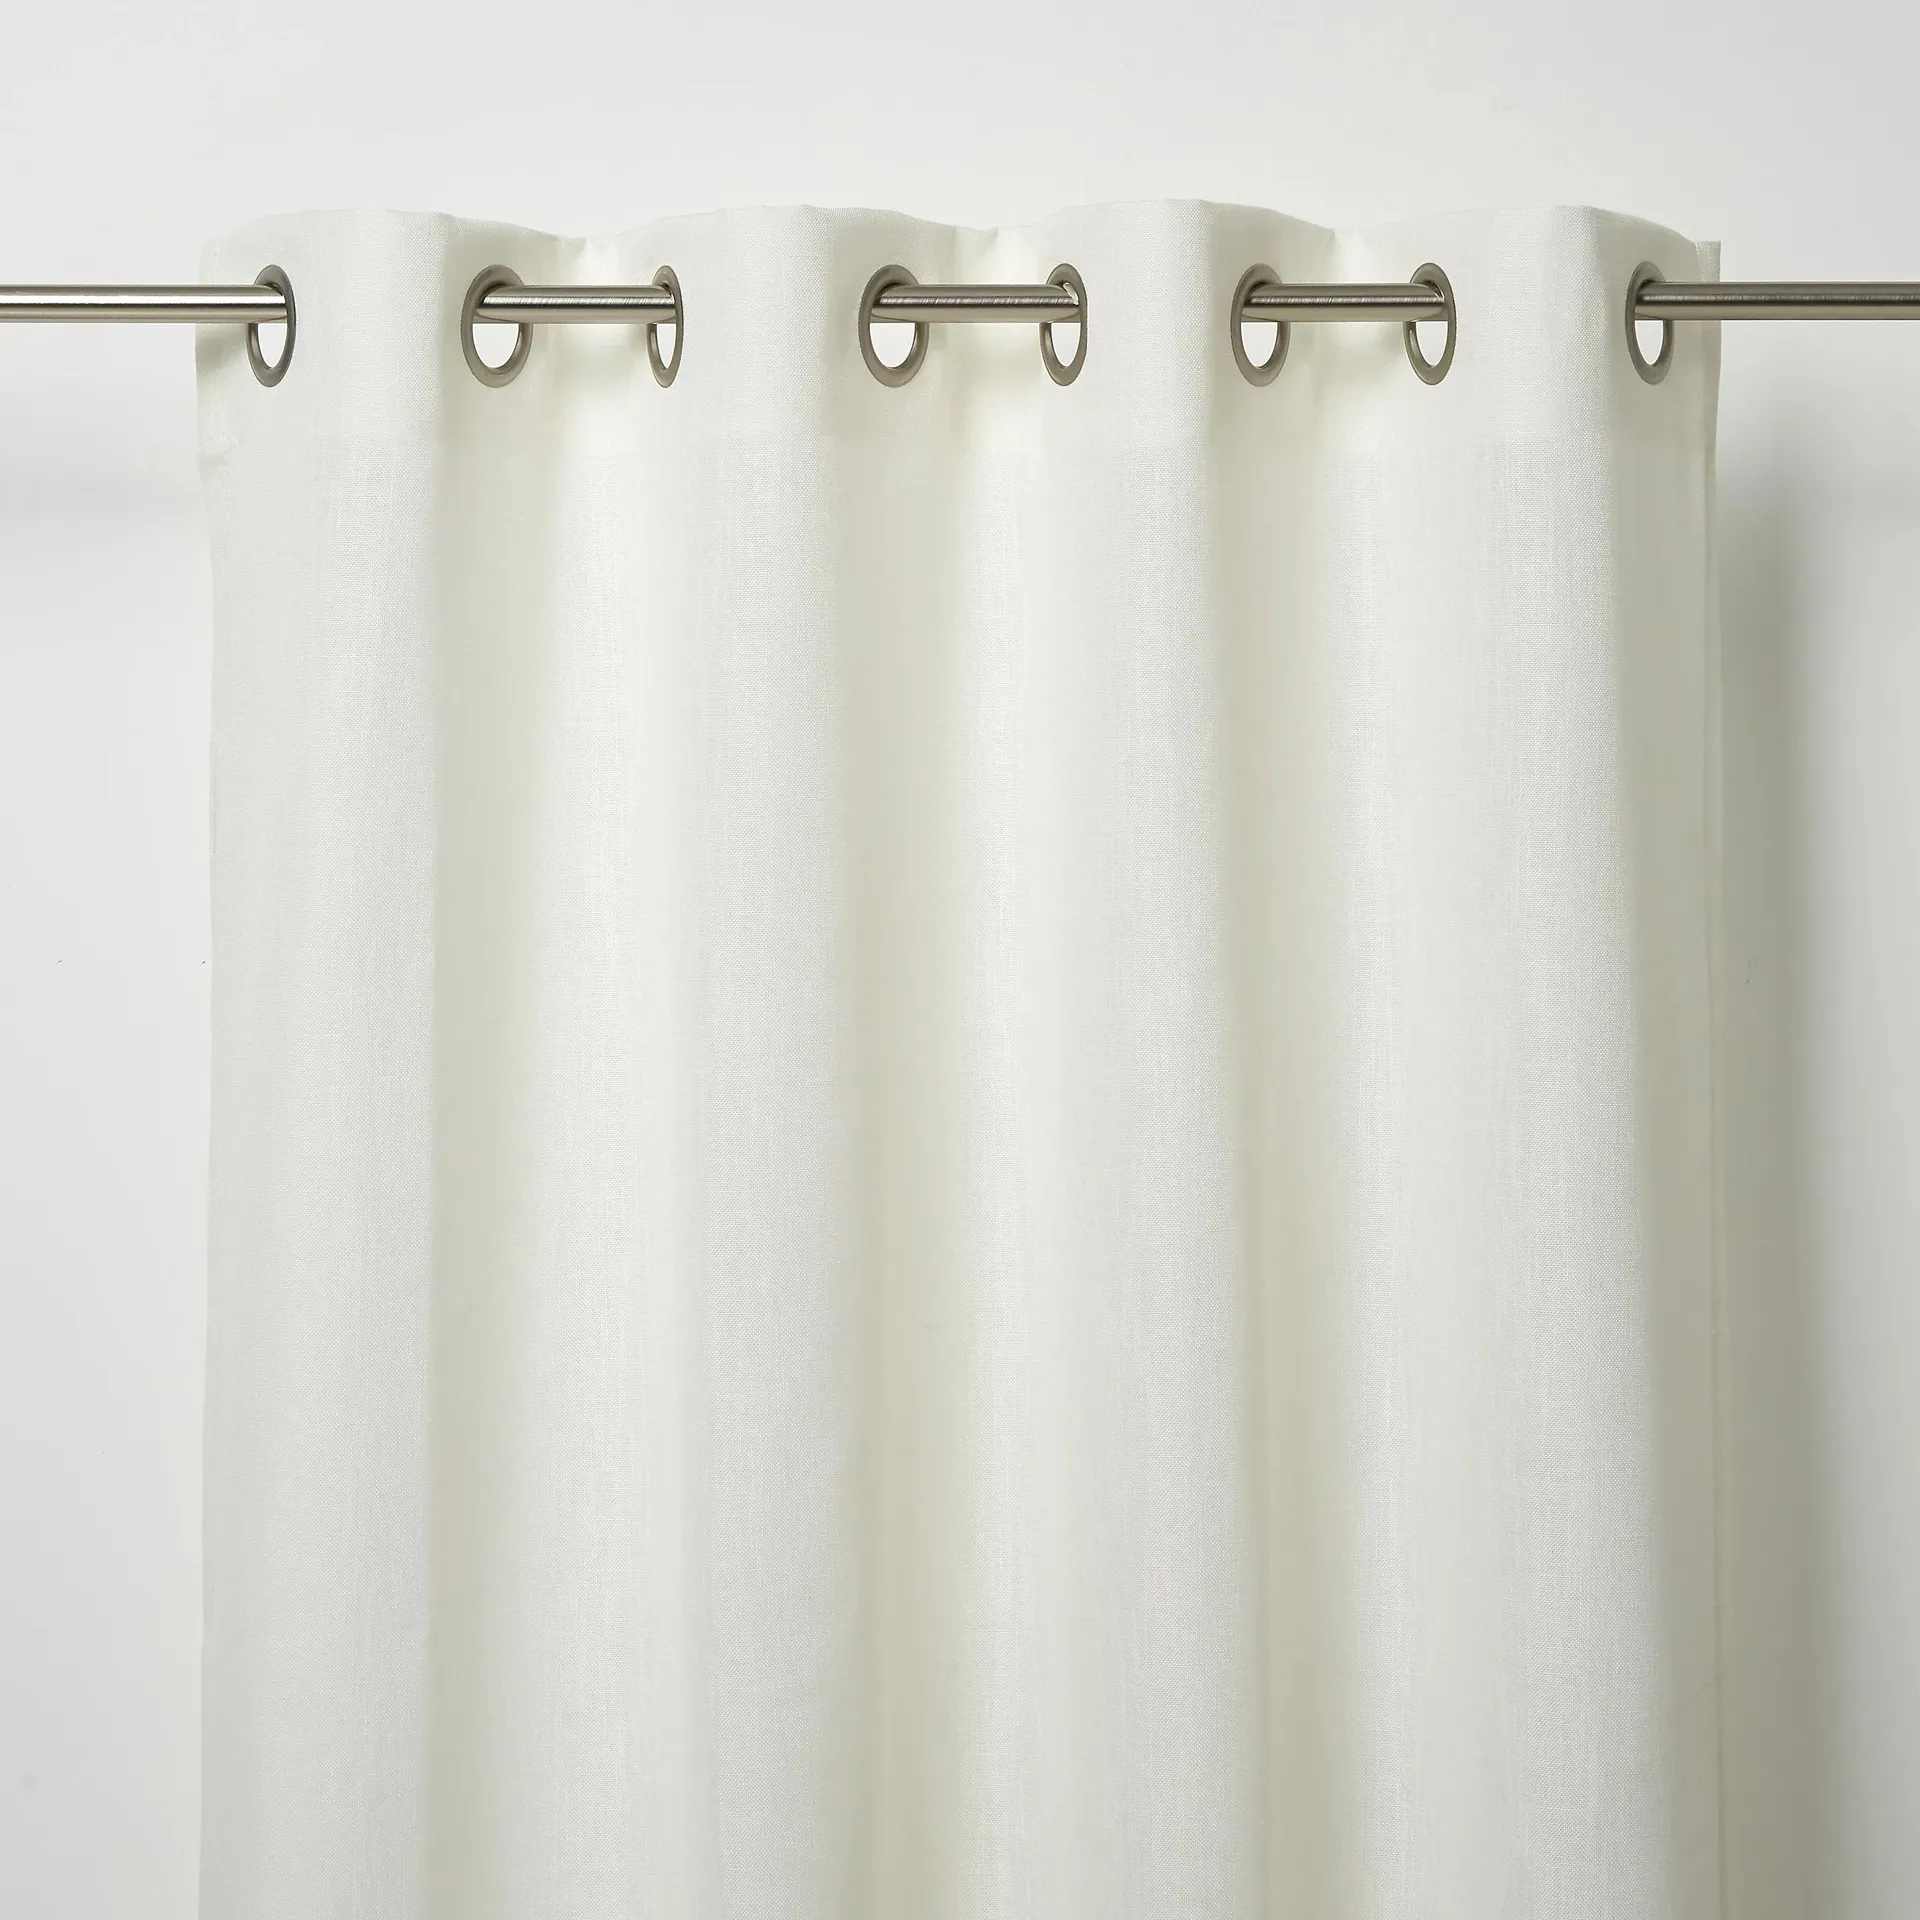 Kippens Off white Plain Net Eyelet Curtain (W)140cm (L)260cm, Single